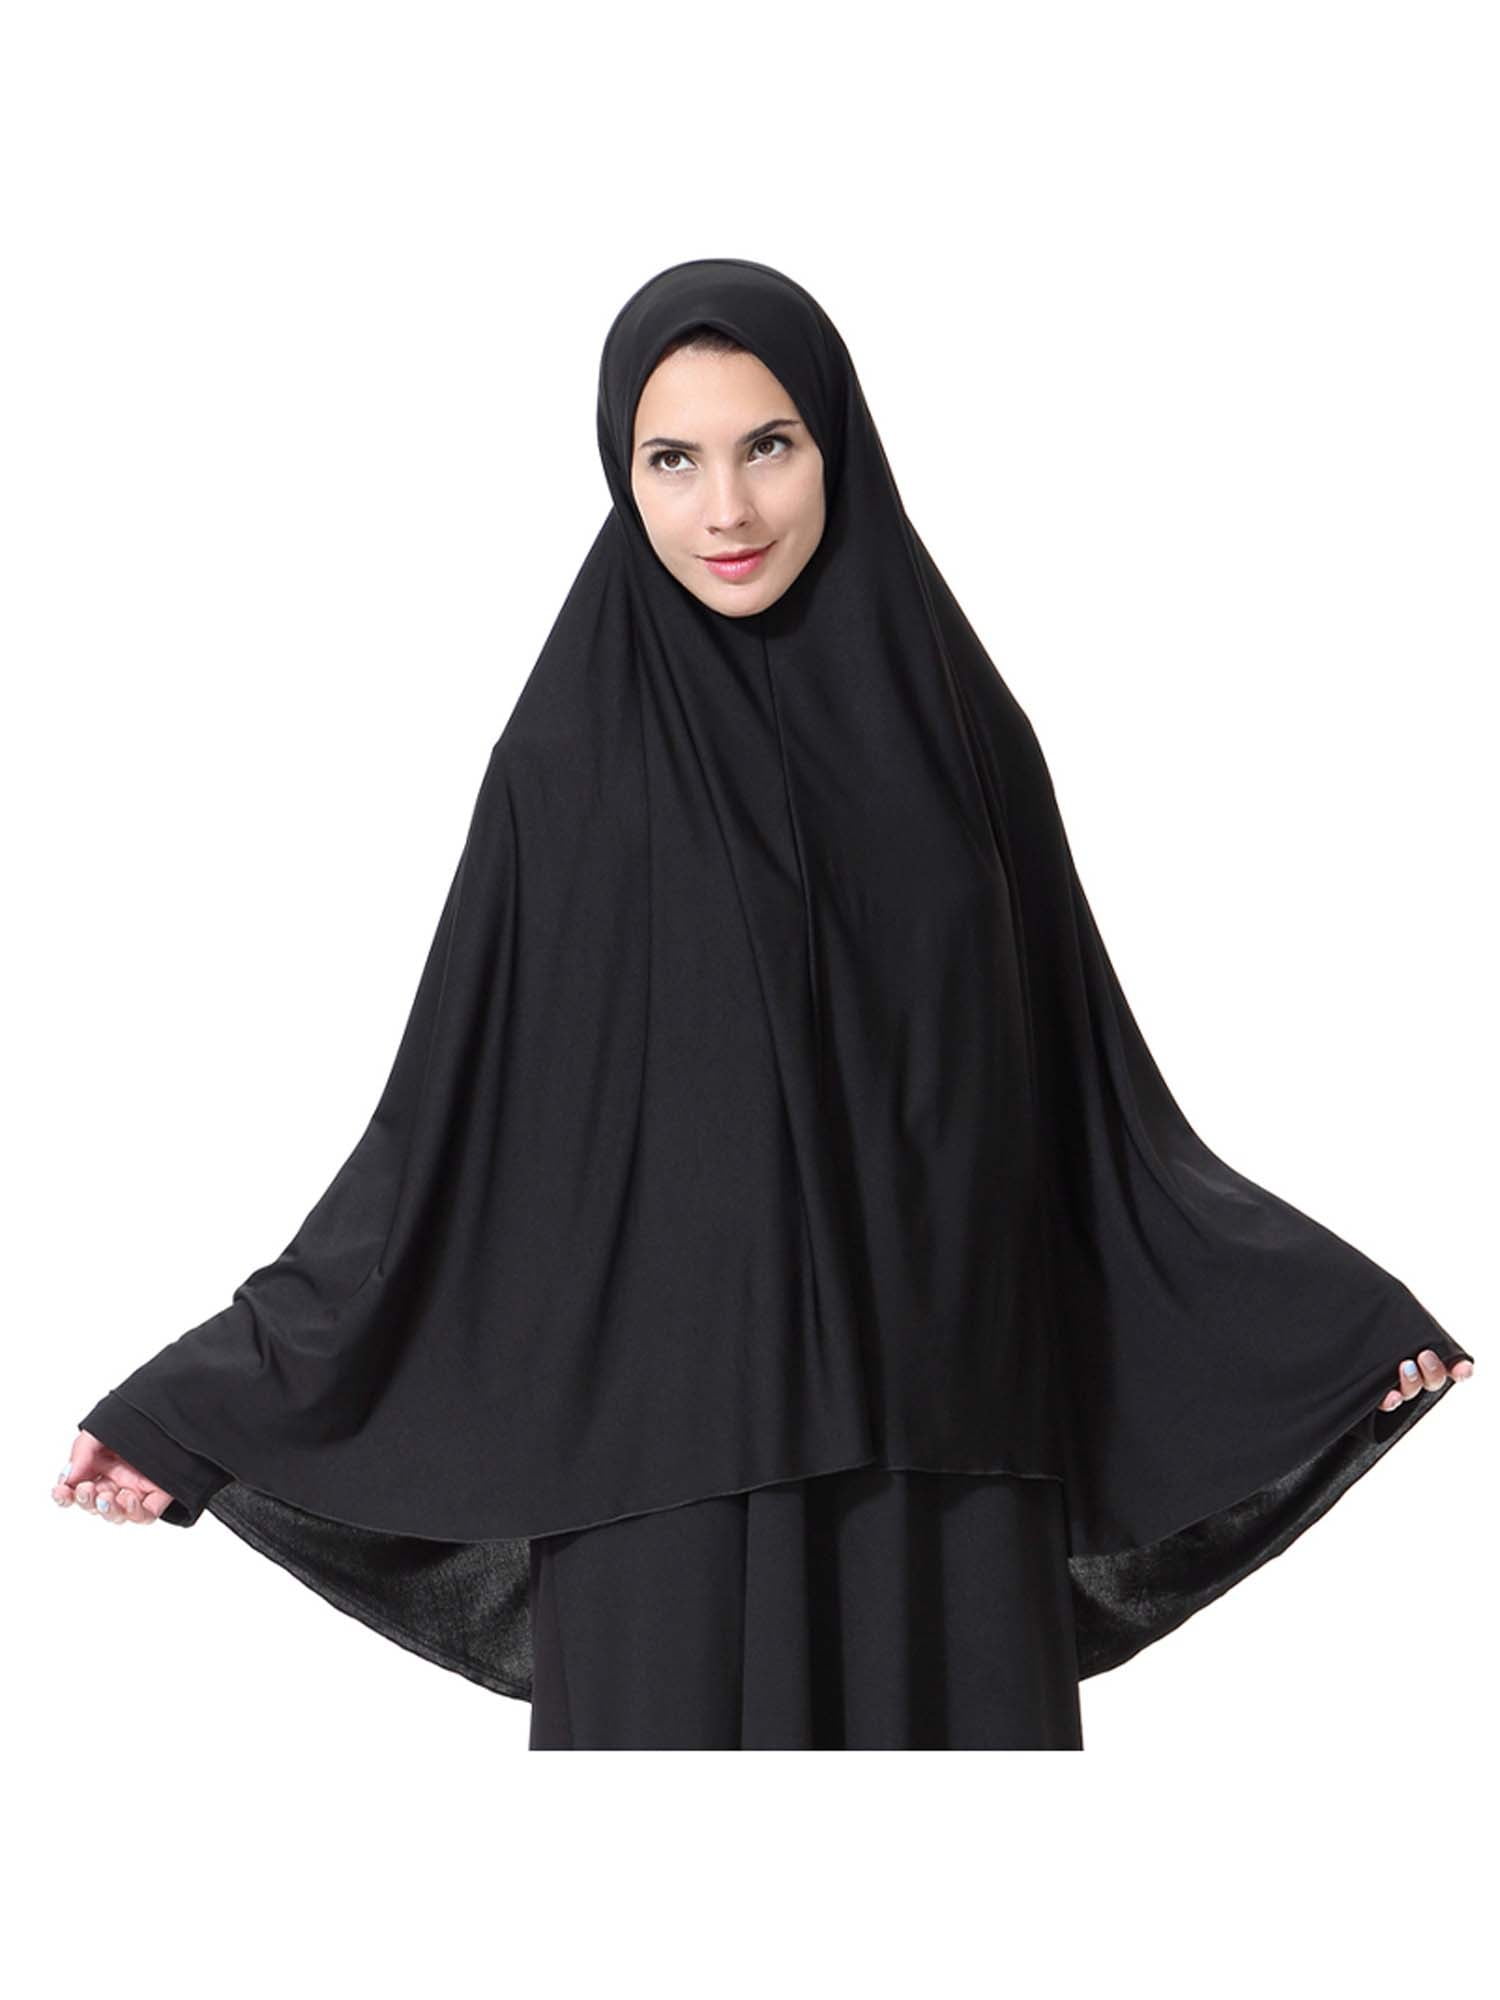 Lallc Arab Muslim Women Prayer Long Hijab Scarf Shawl Overhead Large